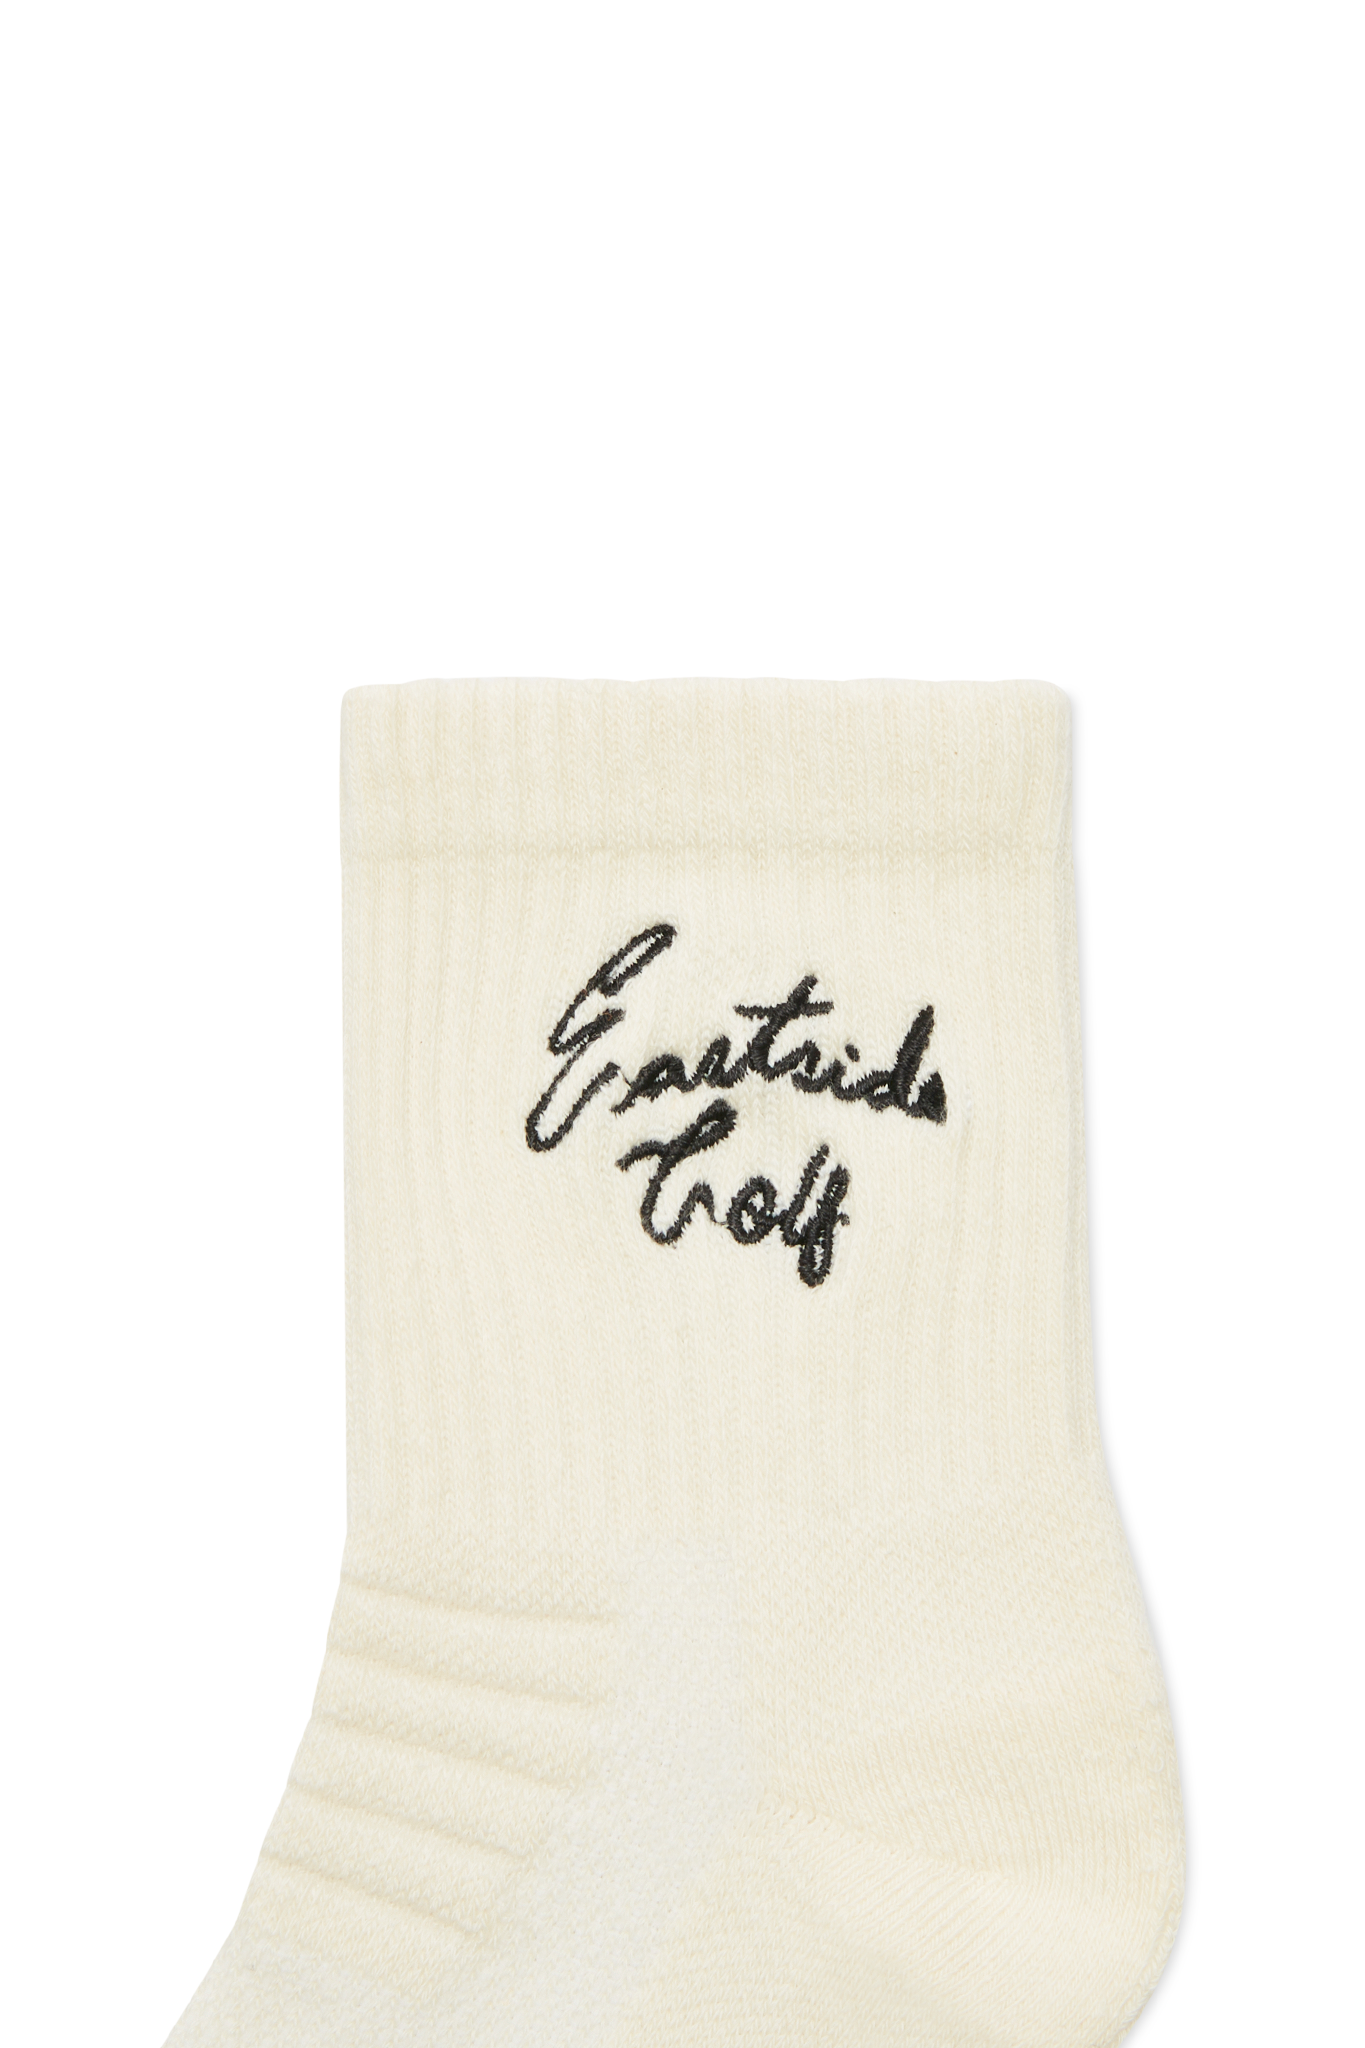 Eastside Golf 1961 Change Ankle Sock Pearl Ivory